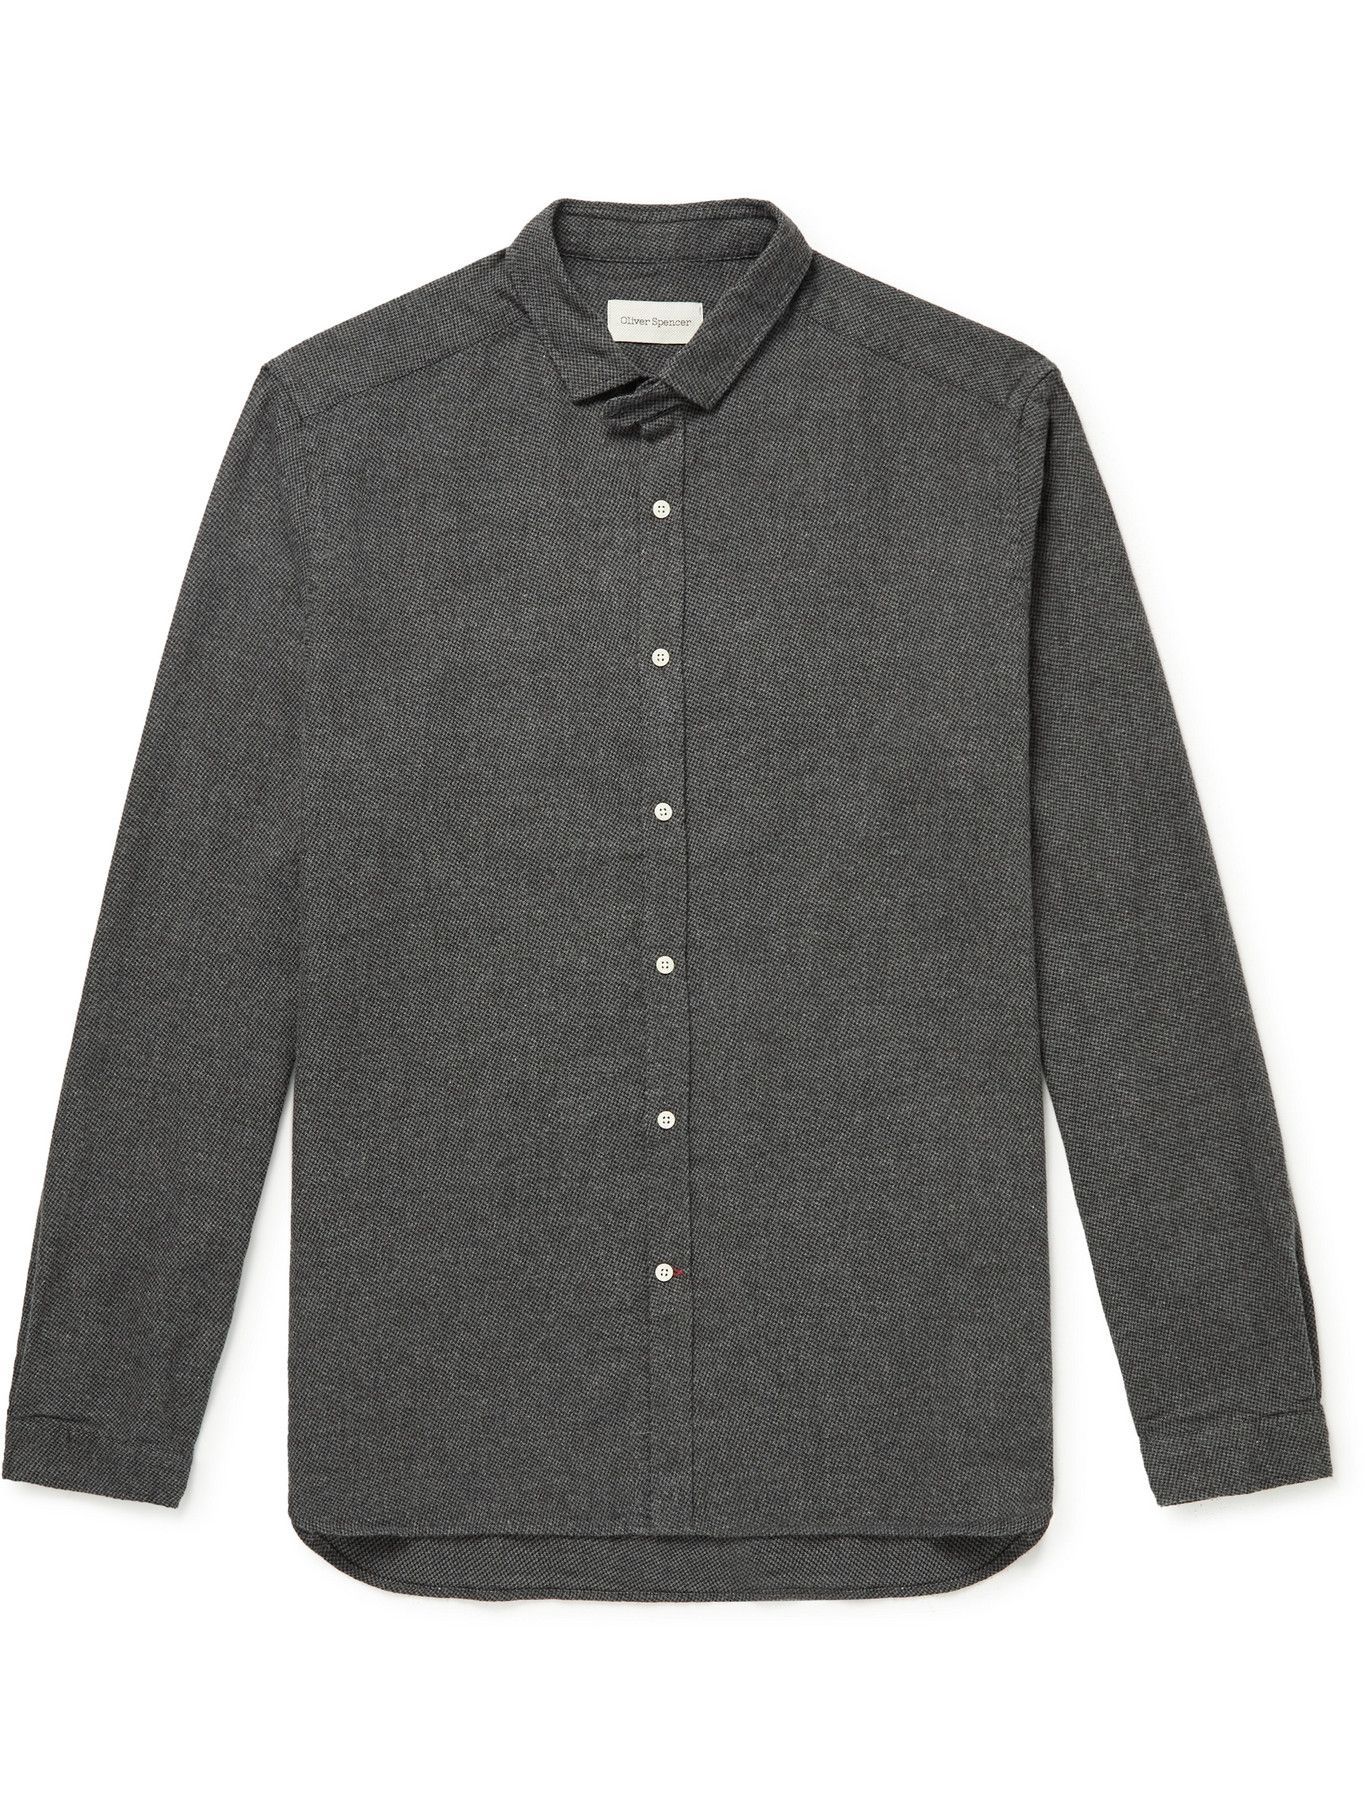 Oliver Spencer - Clerkenwell Cotton Shirt - Gray